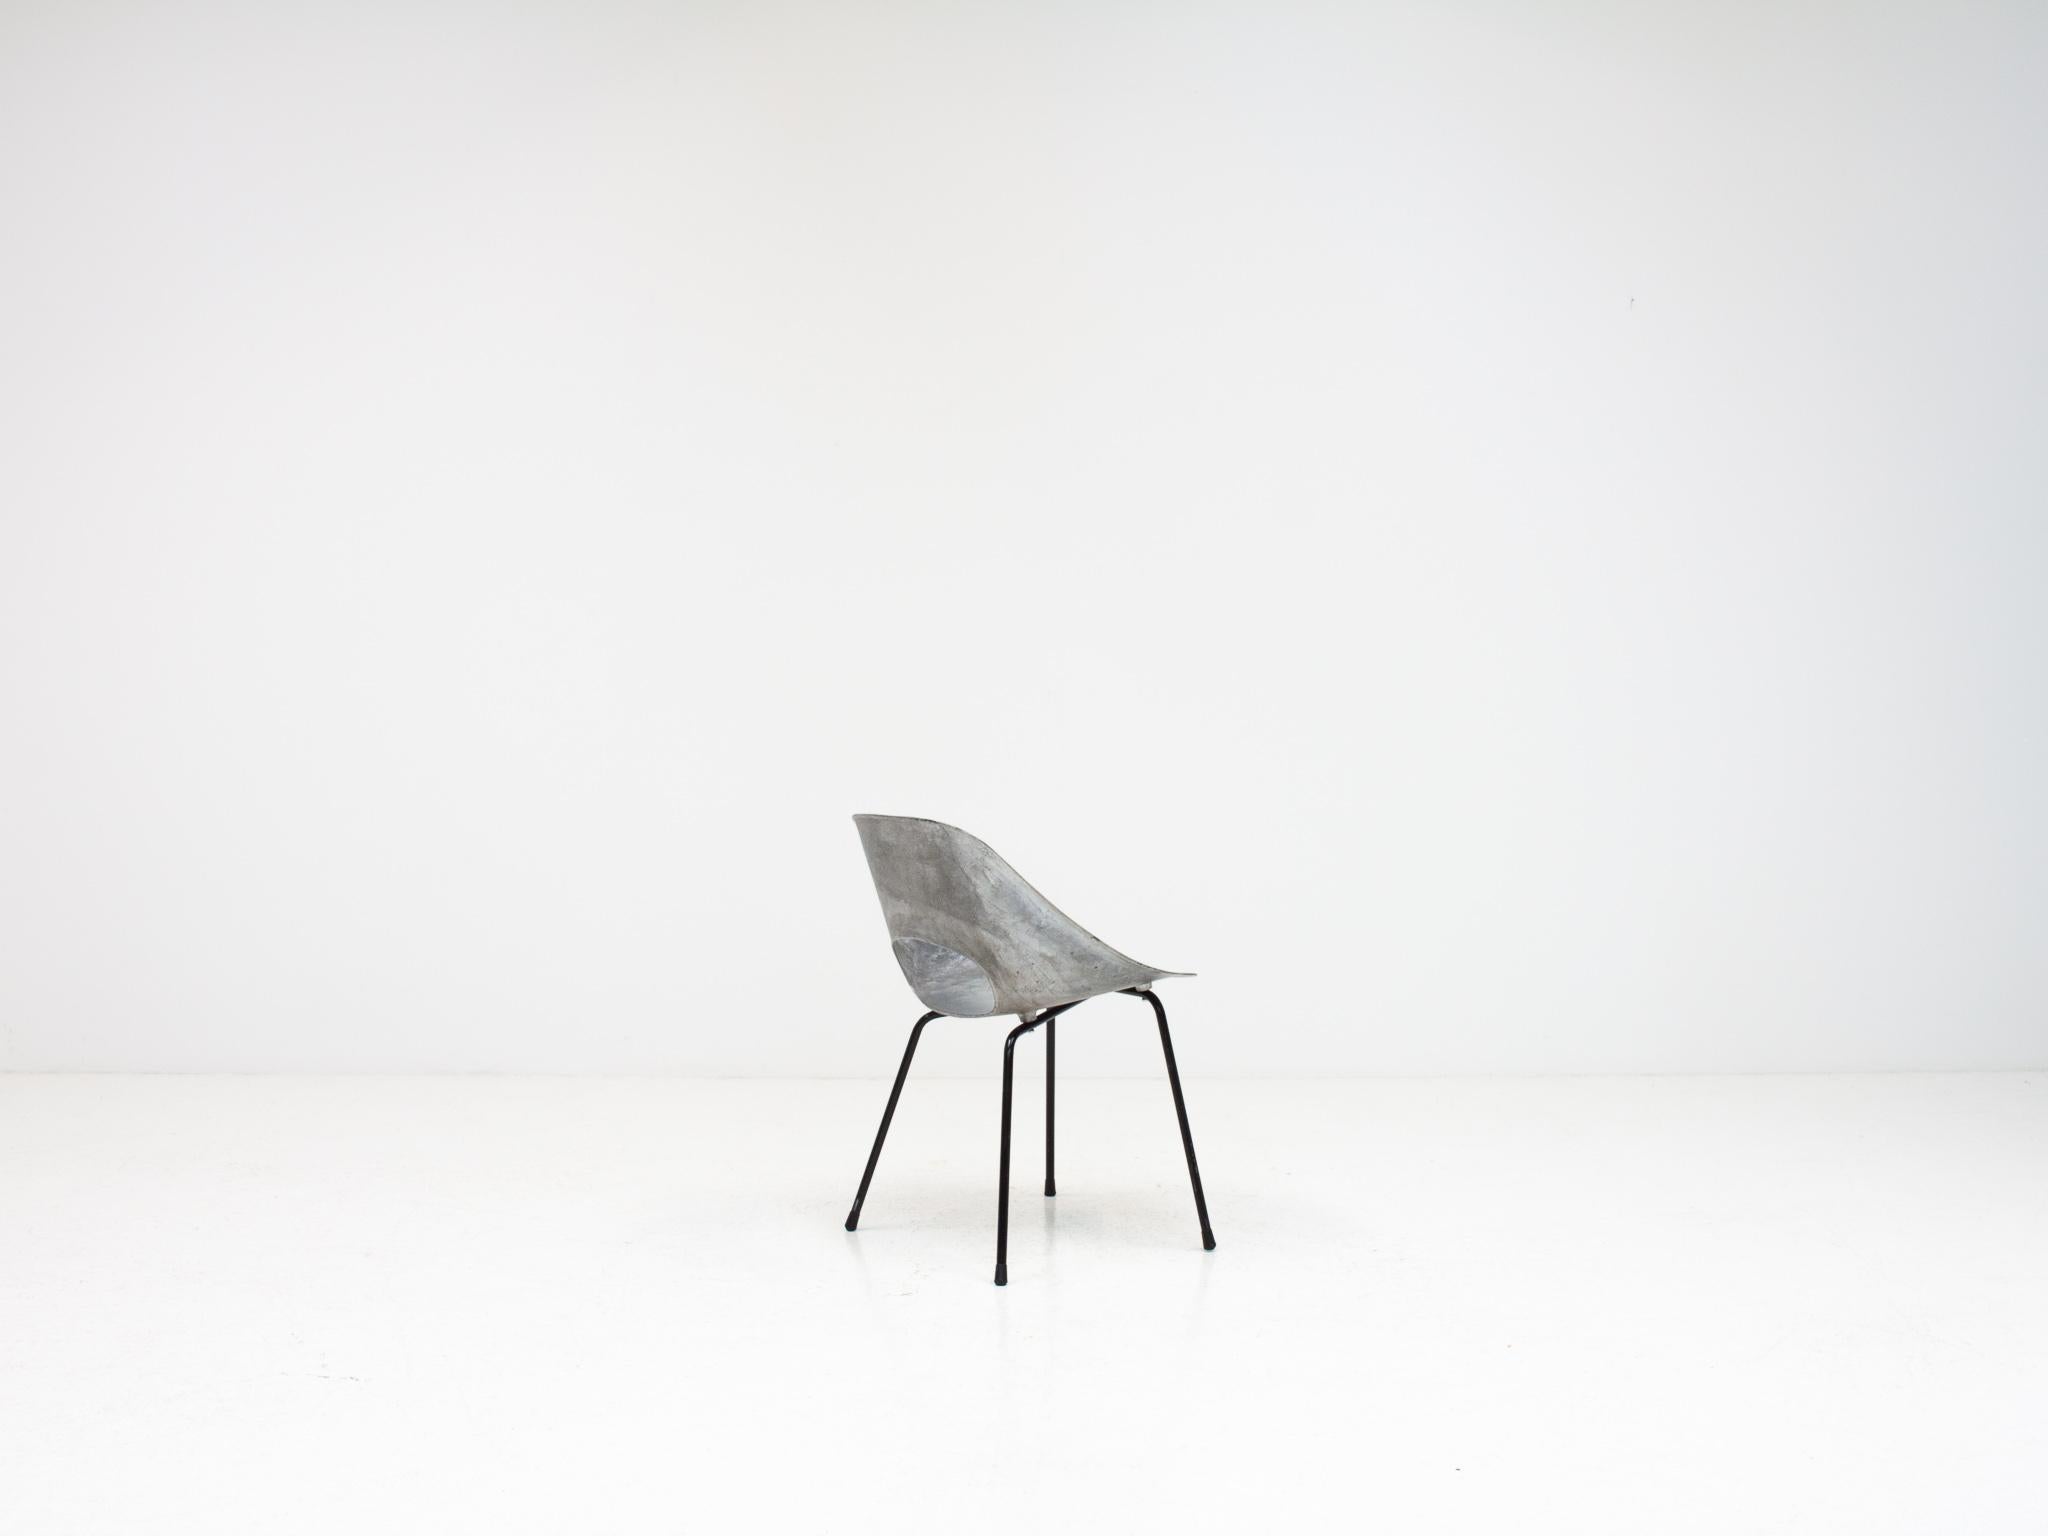 Mid-Century Modern Pierre Guariche Tulip Chair, Cast Aluminum, Steiner Meubles, Paris, 1954